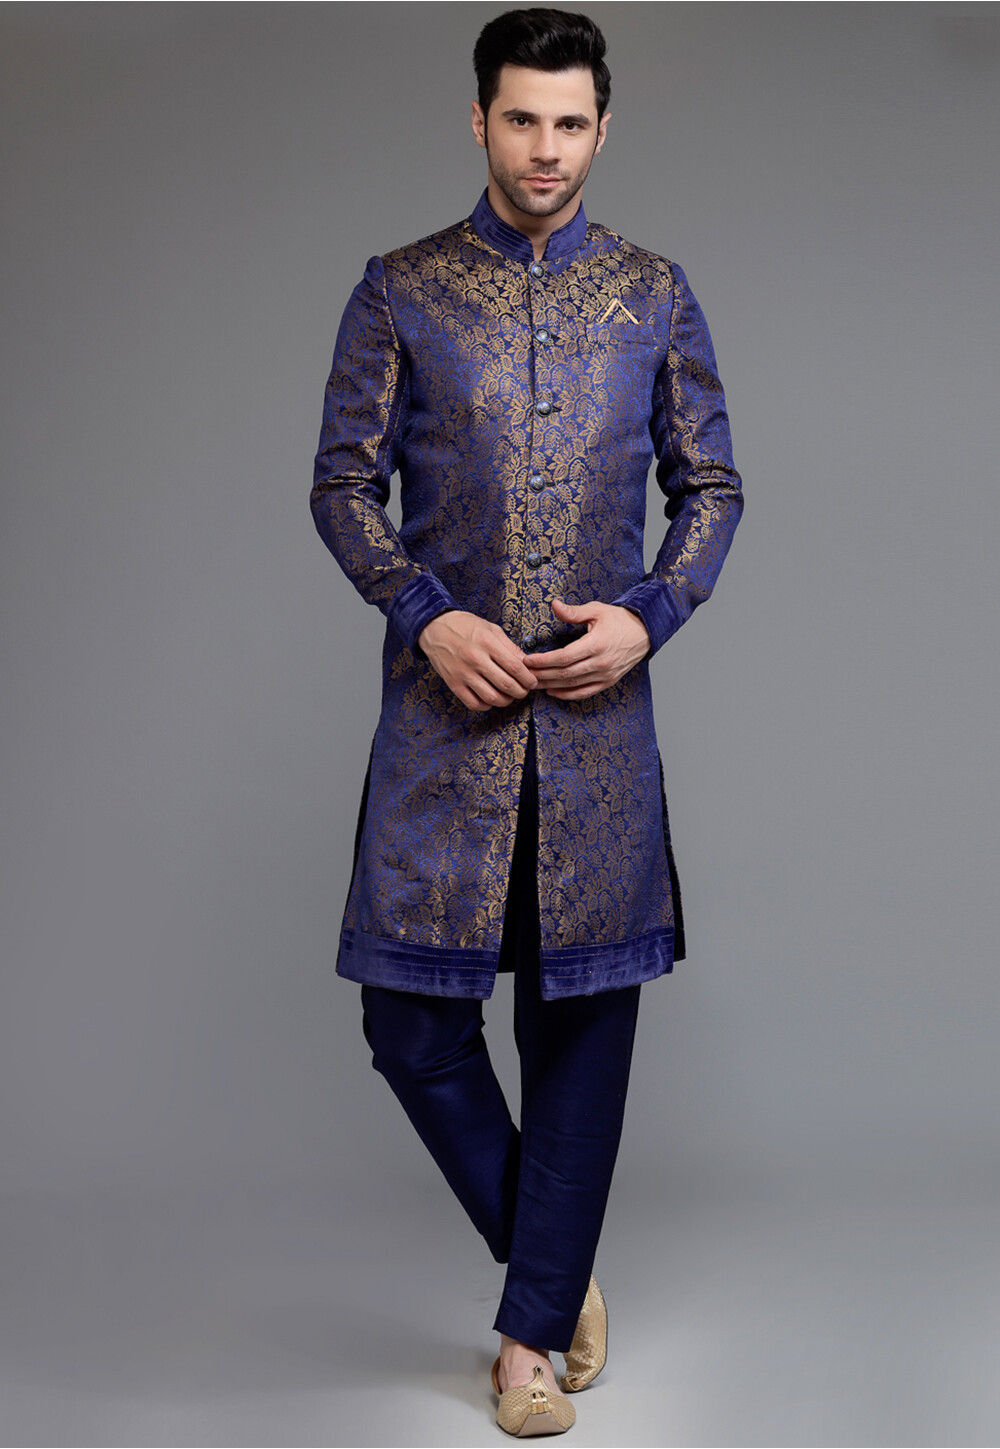 Buy Brocade Sherwani in Royal Blue Online : MXX420 - Utsav Fashion